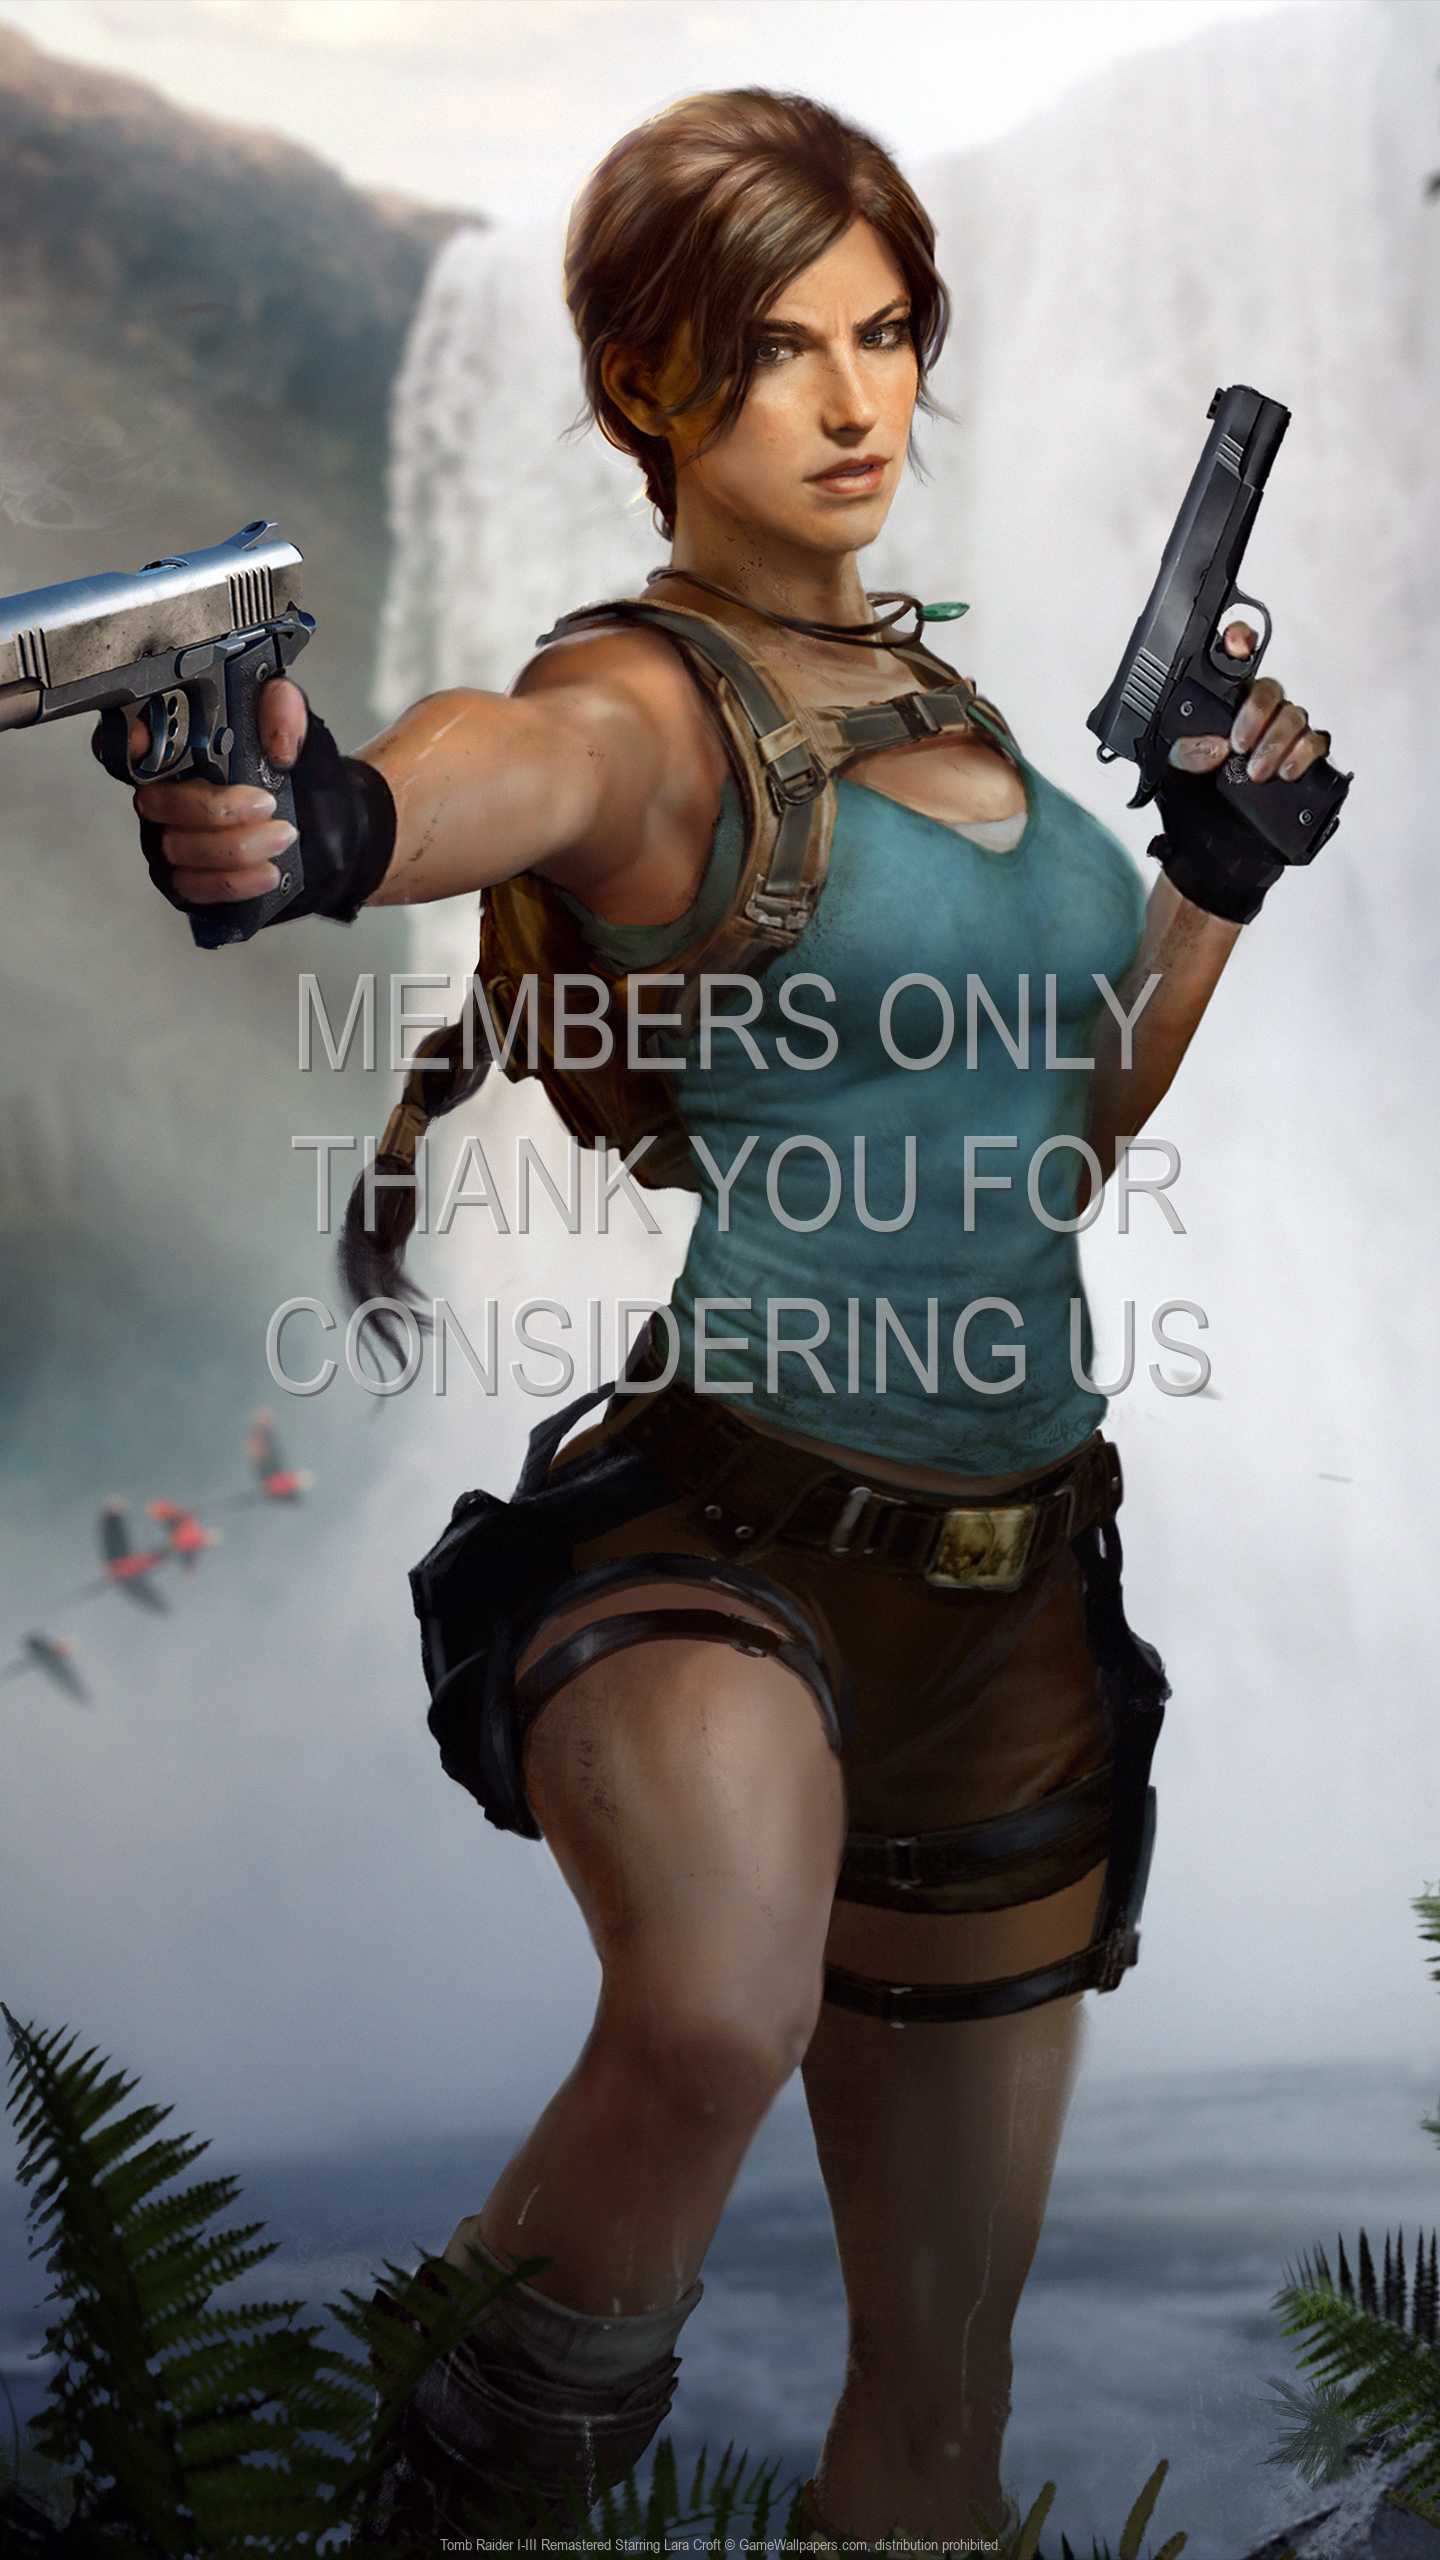 Tomb Raider I-III Remastered Starring Lara Croft 1440p%20Vertical Mvil fondo de escritorio 02